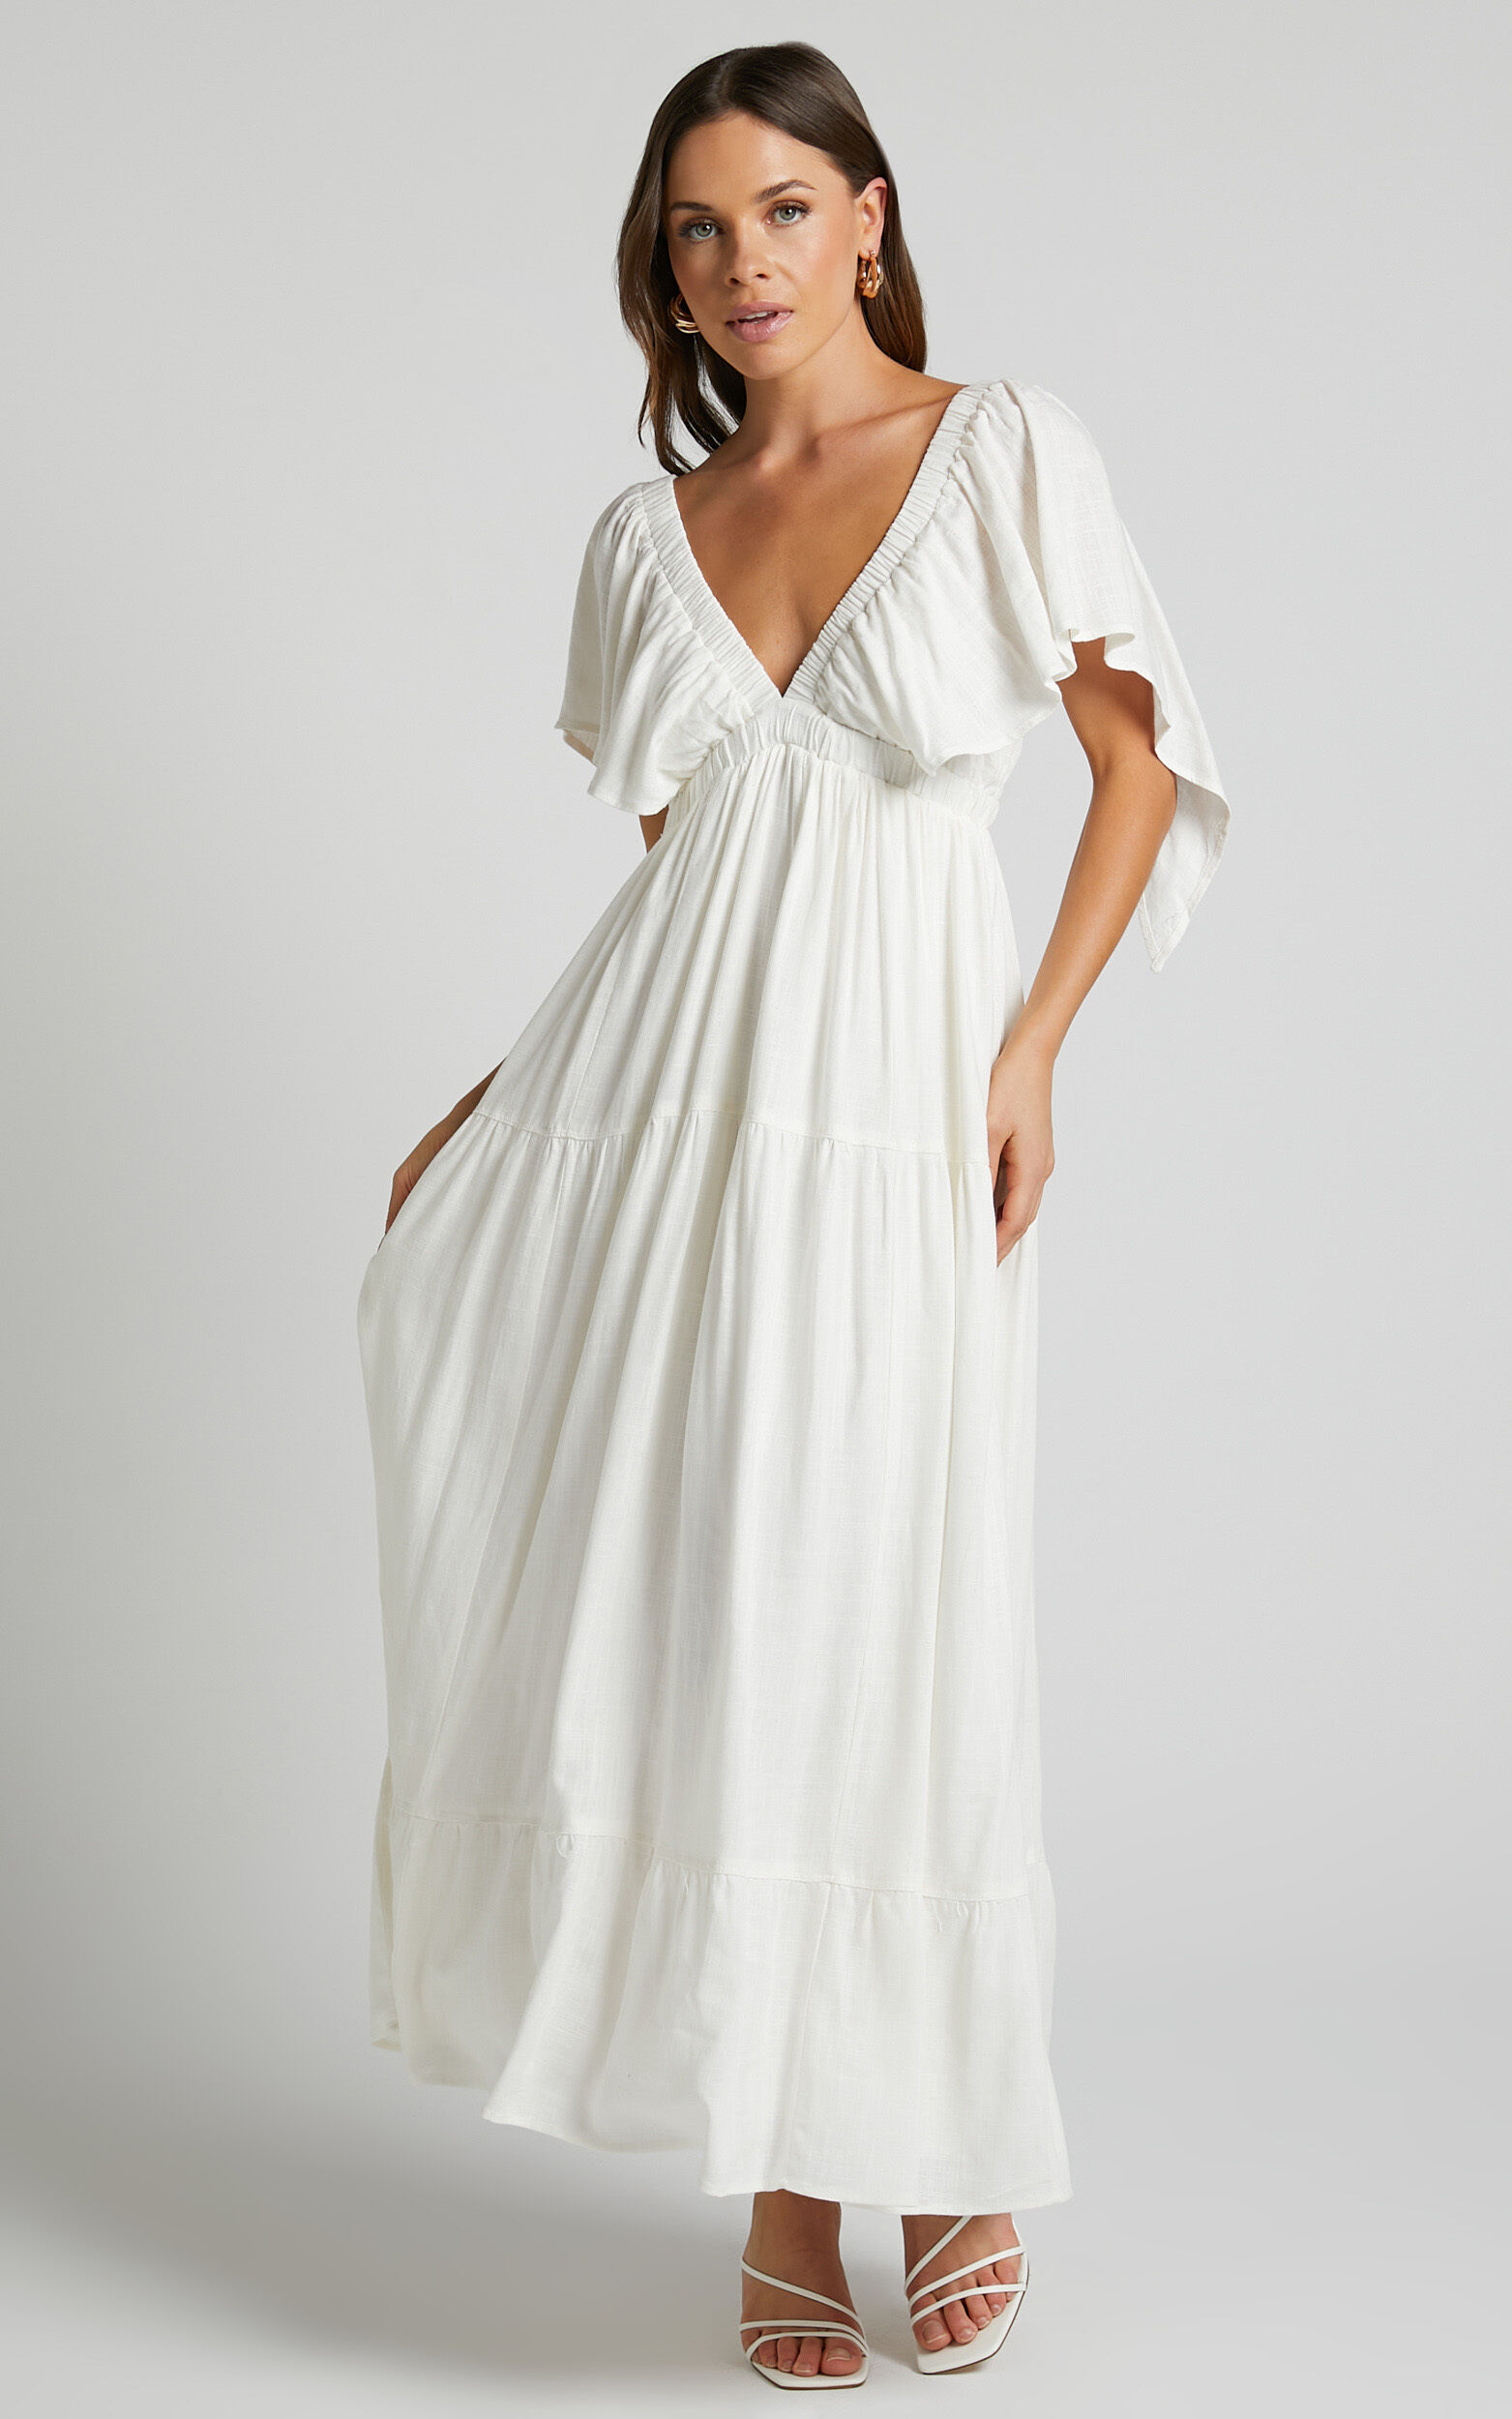 Lyrad Midaxi Dress - Empire Waist Textured Dress in White - 06, WHT1